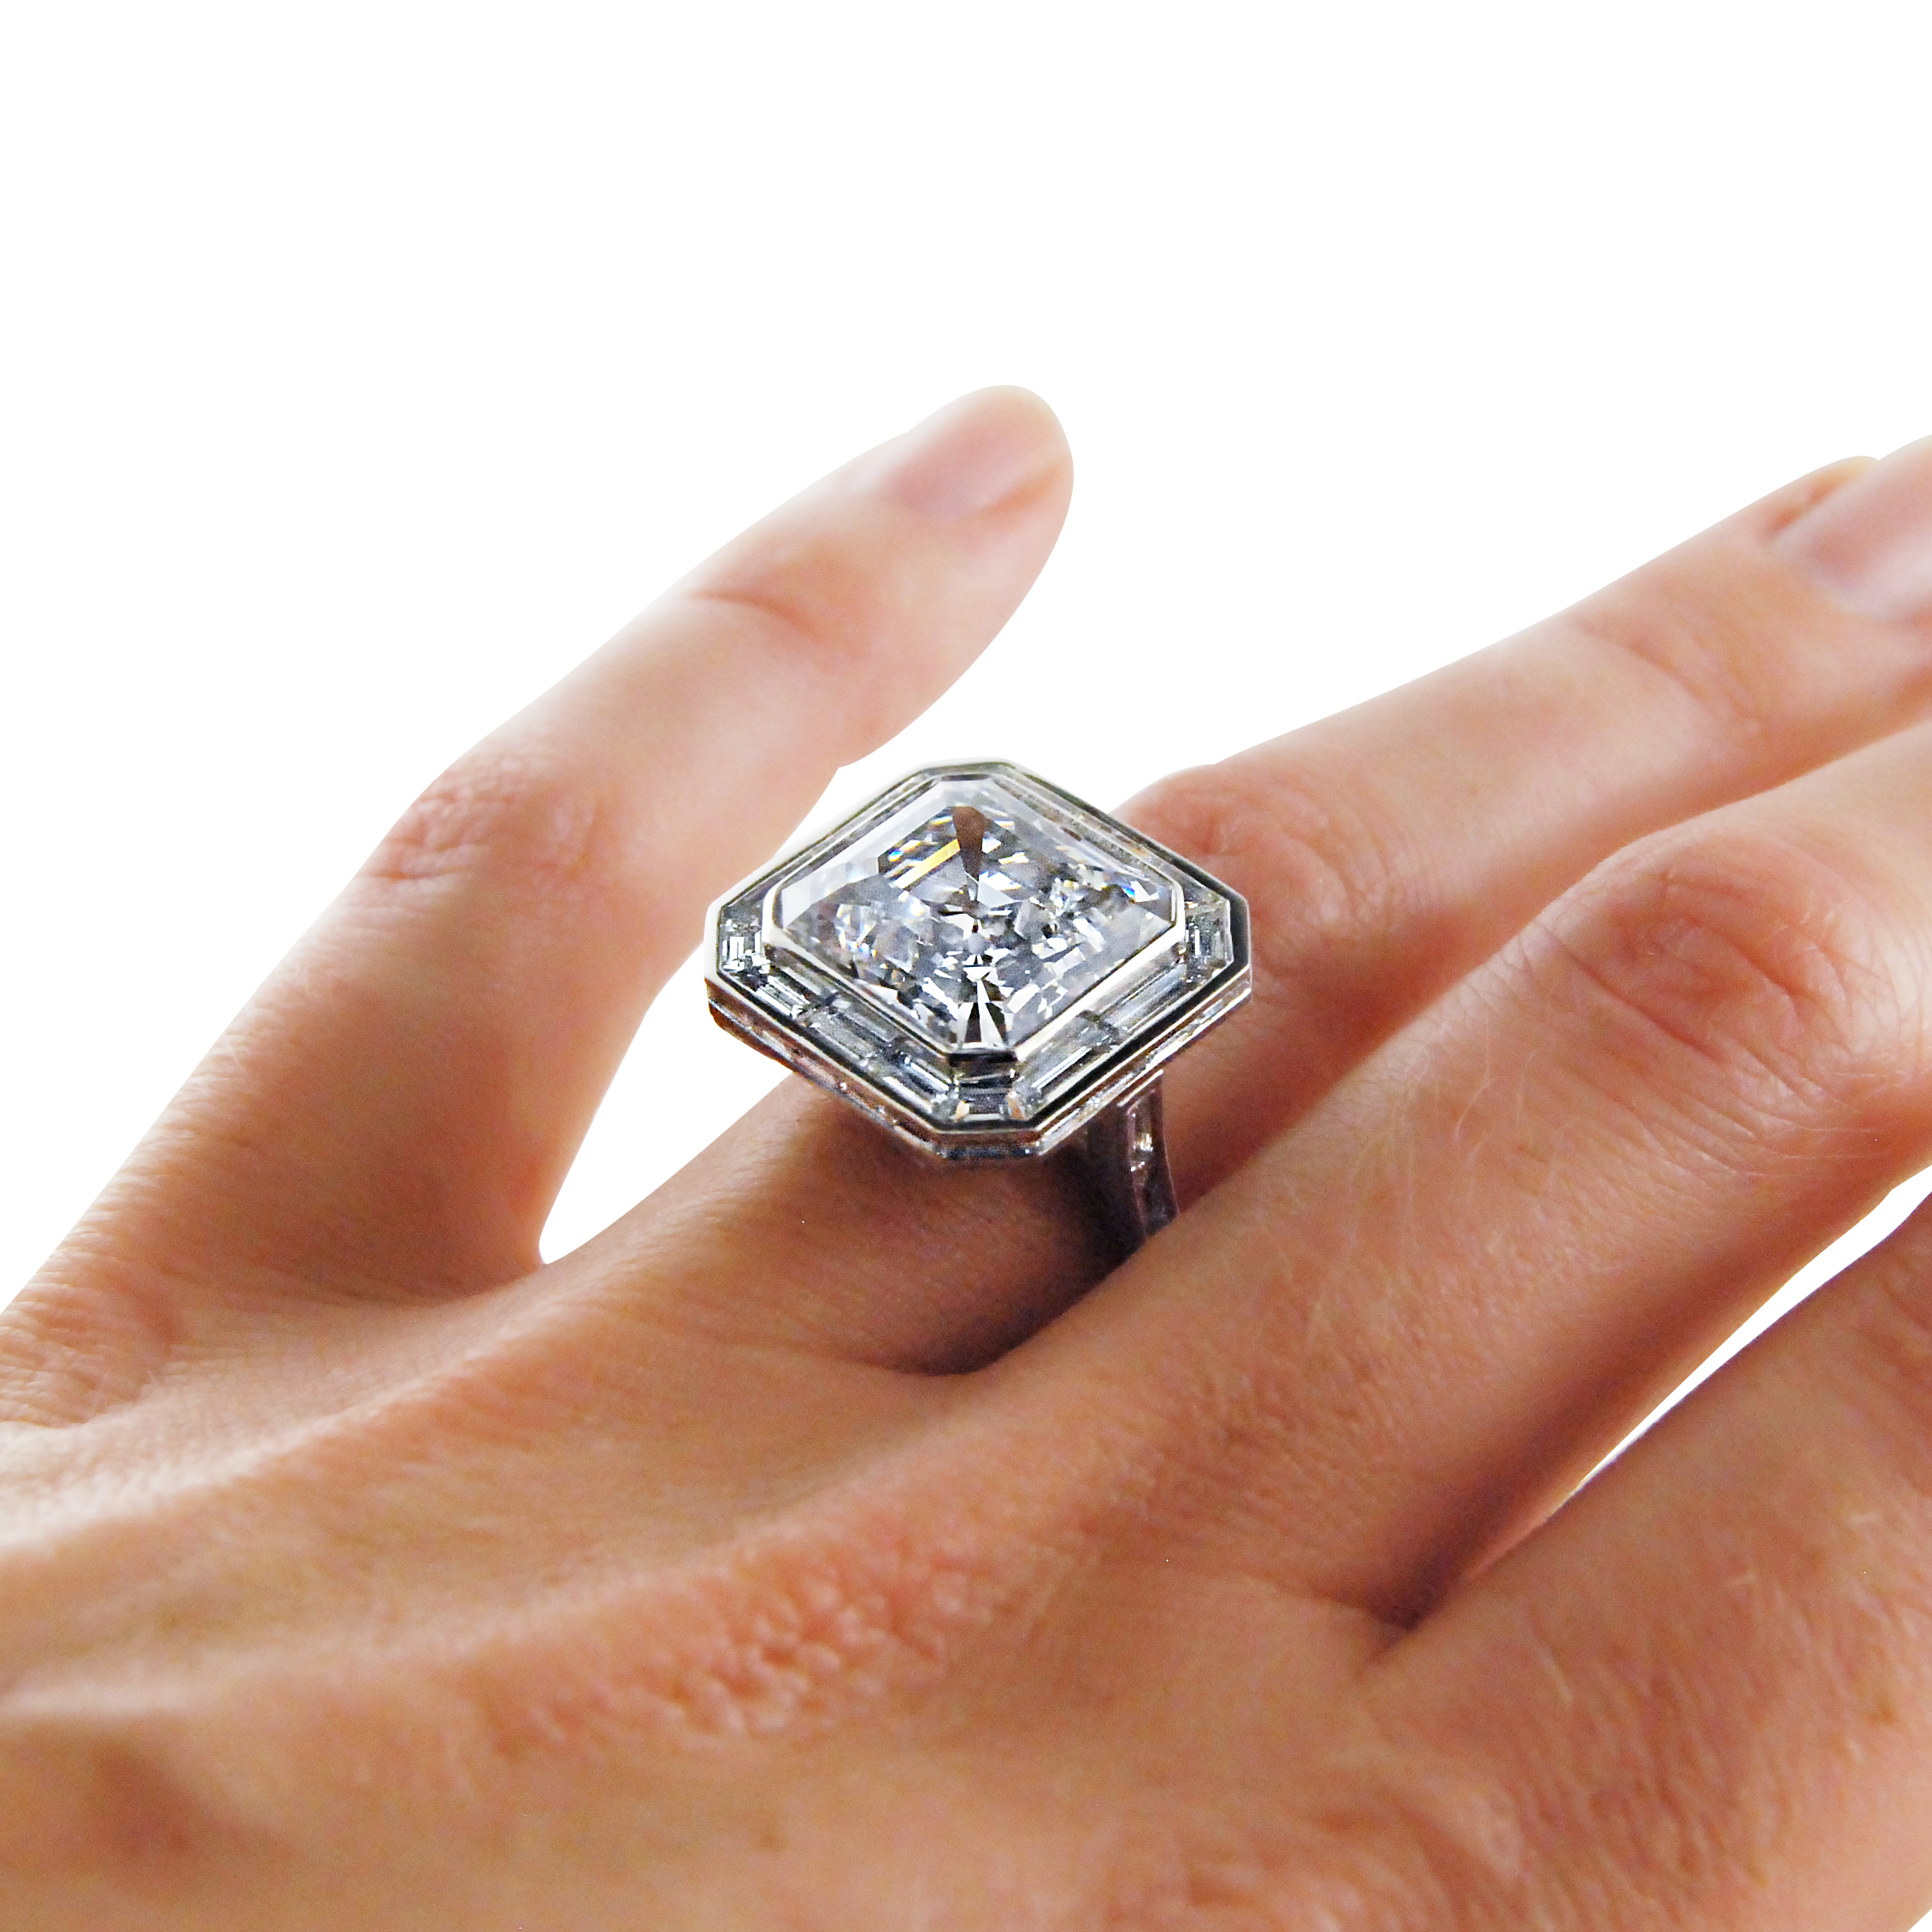 10.62ct-step-cut-diamond-and-platinum-ring-2.jpg